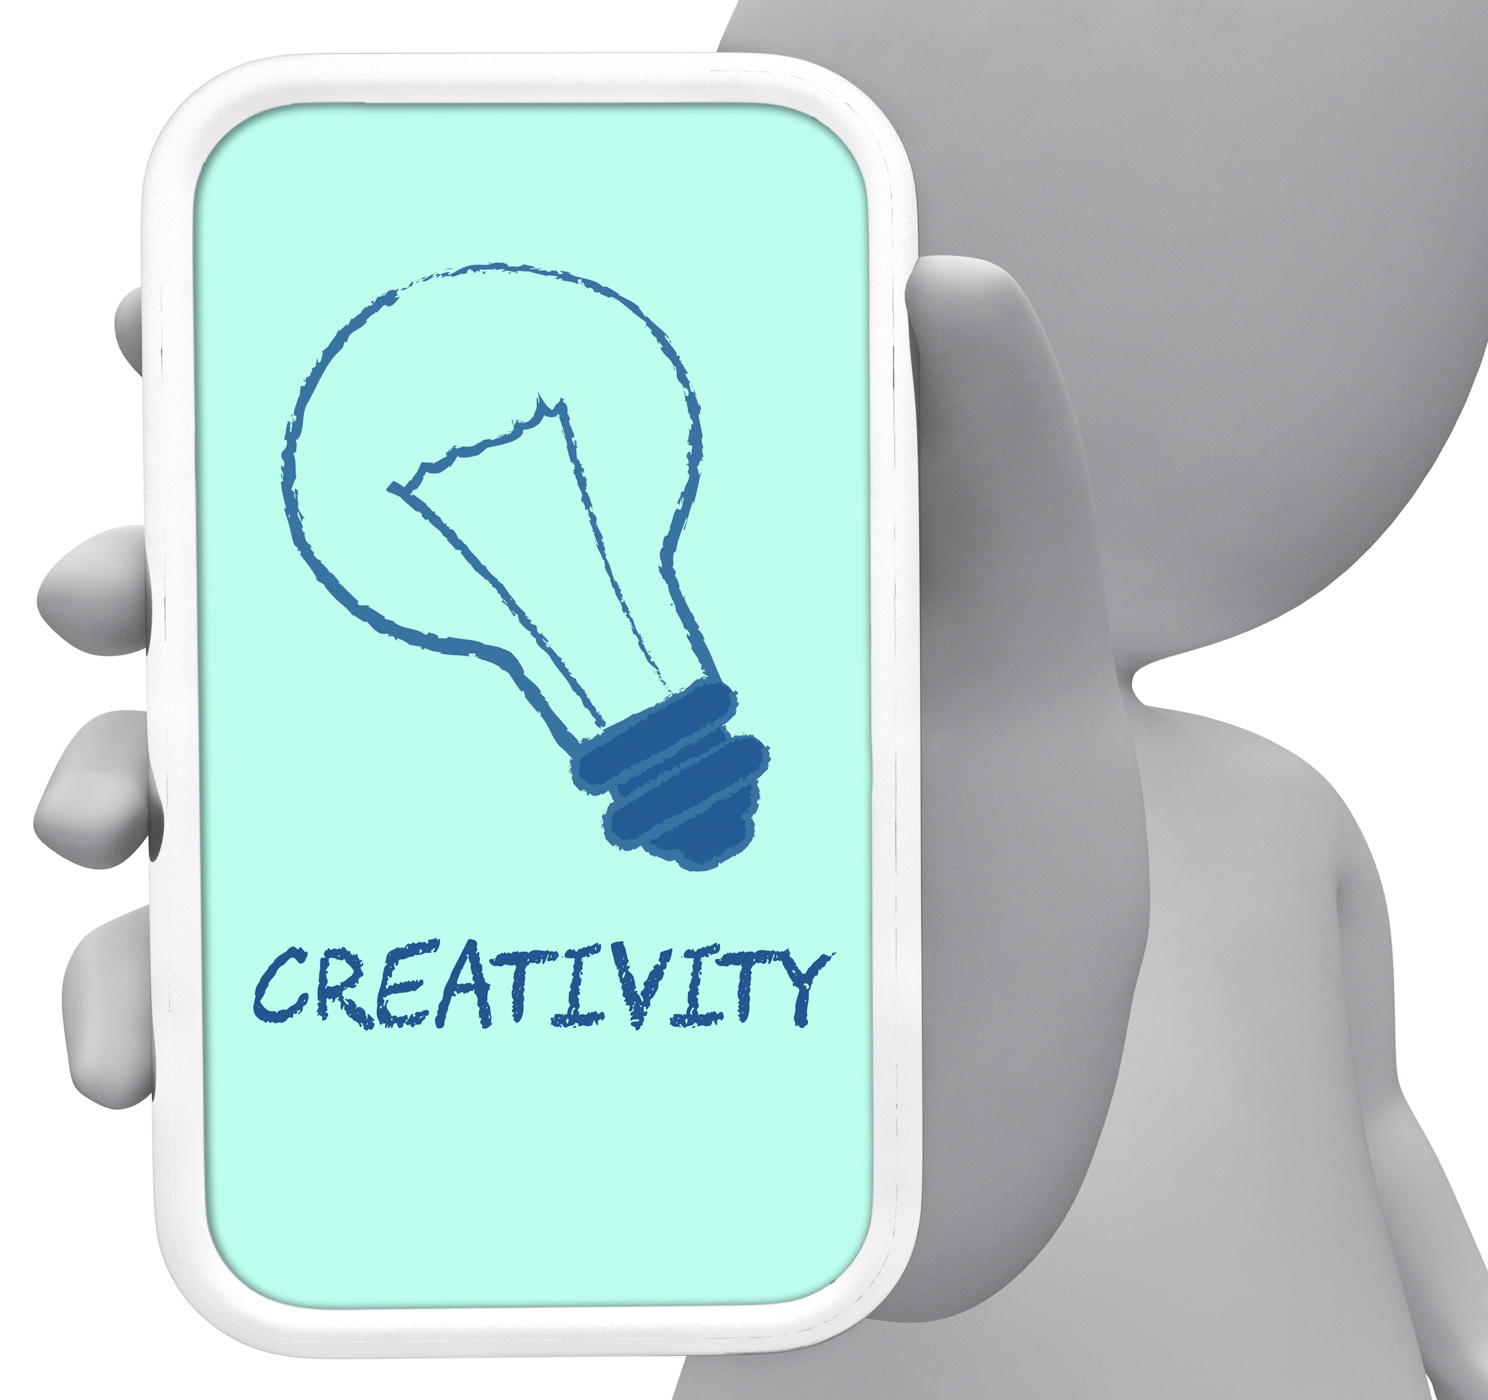 Creativity Online Shows Design Ideas 3d Rendering, Designs, OtherKeywords, Innovations, Innovation, HQ Photo